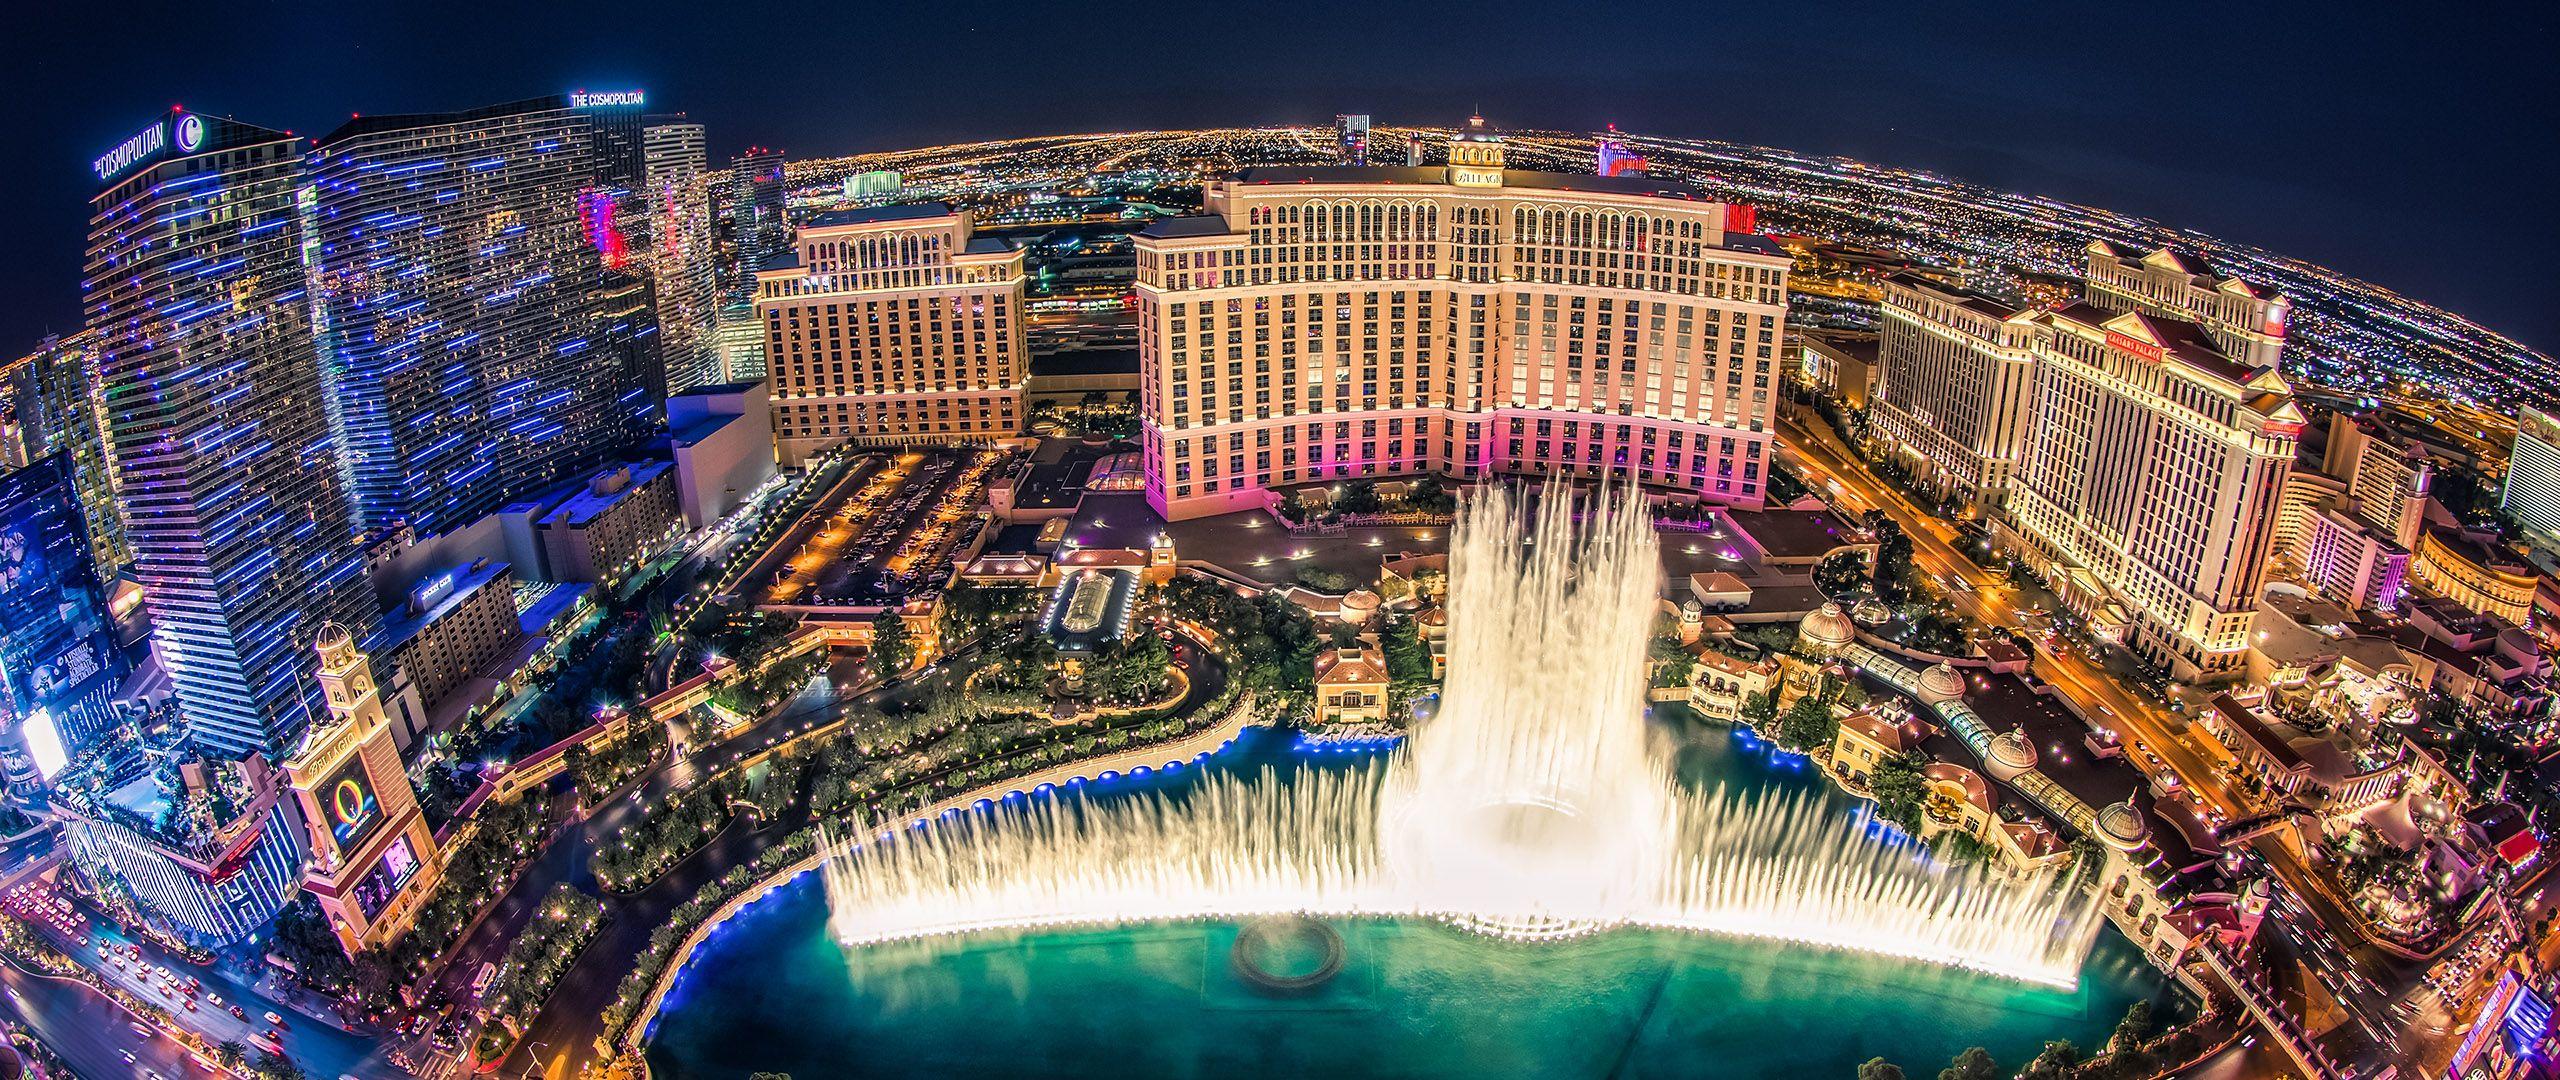 Bellagio Hotel Las Vegas Fountain Show Top View Wallpaper